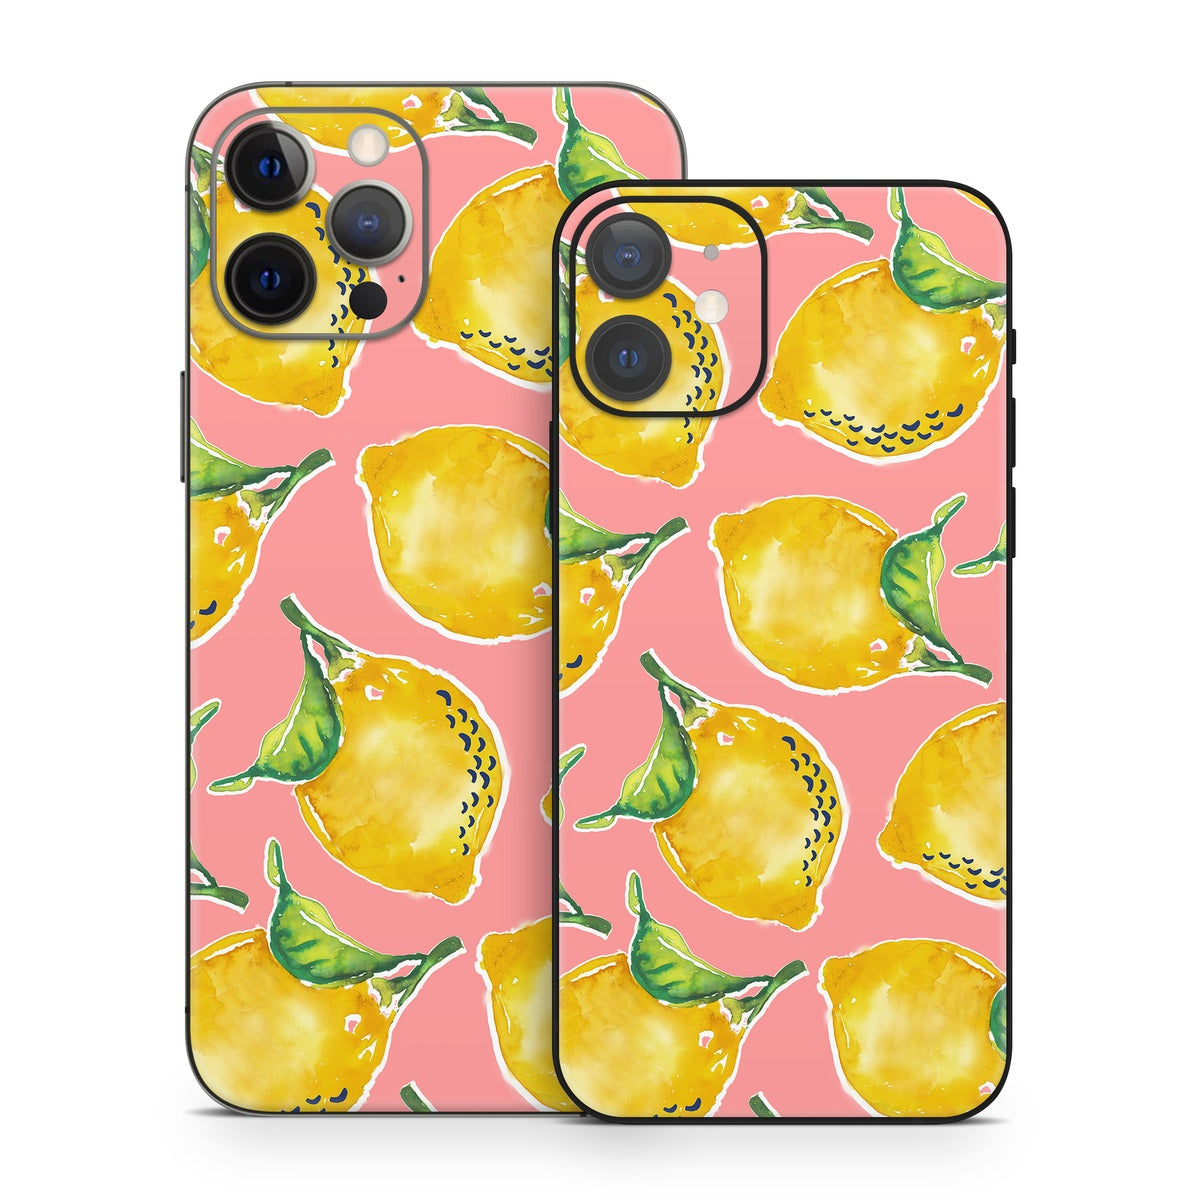 Lemon - Apple iPhone 12 Skin